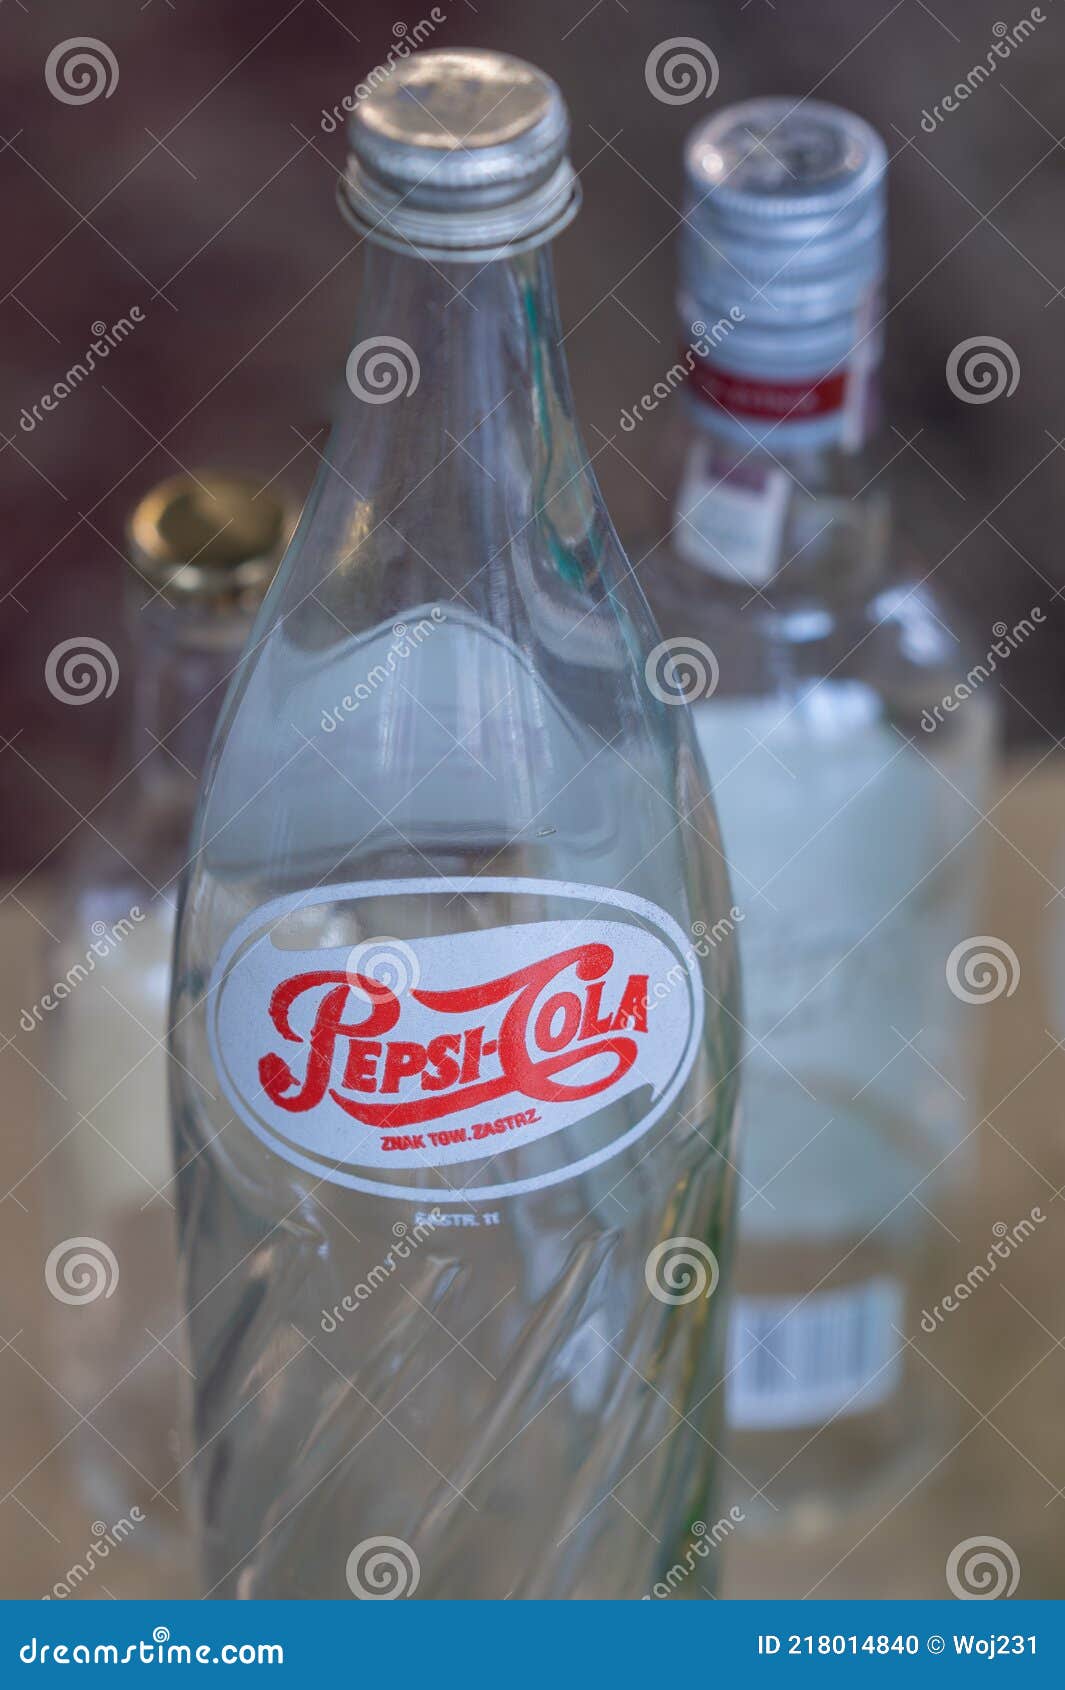 Old pepsi bottles